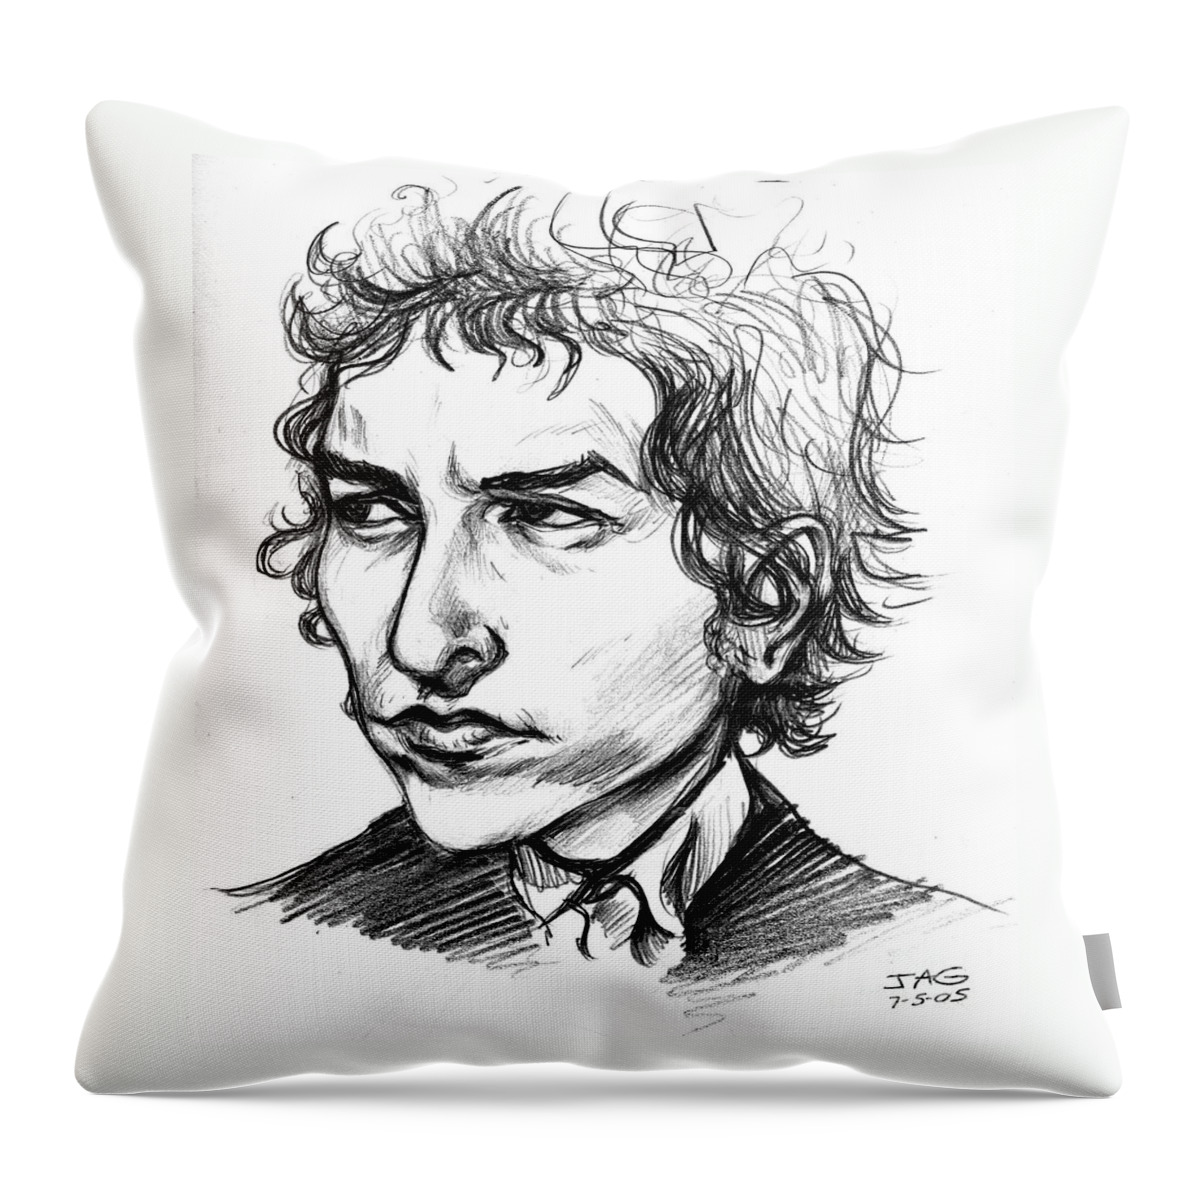 Bob Dylan Throw Pillow featuring the drawing Bob Dylan Sketch Portrait by John Ashton Golden